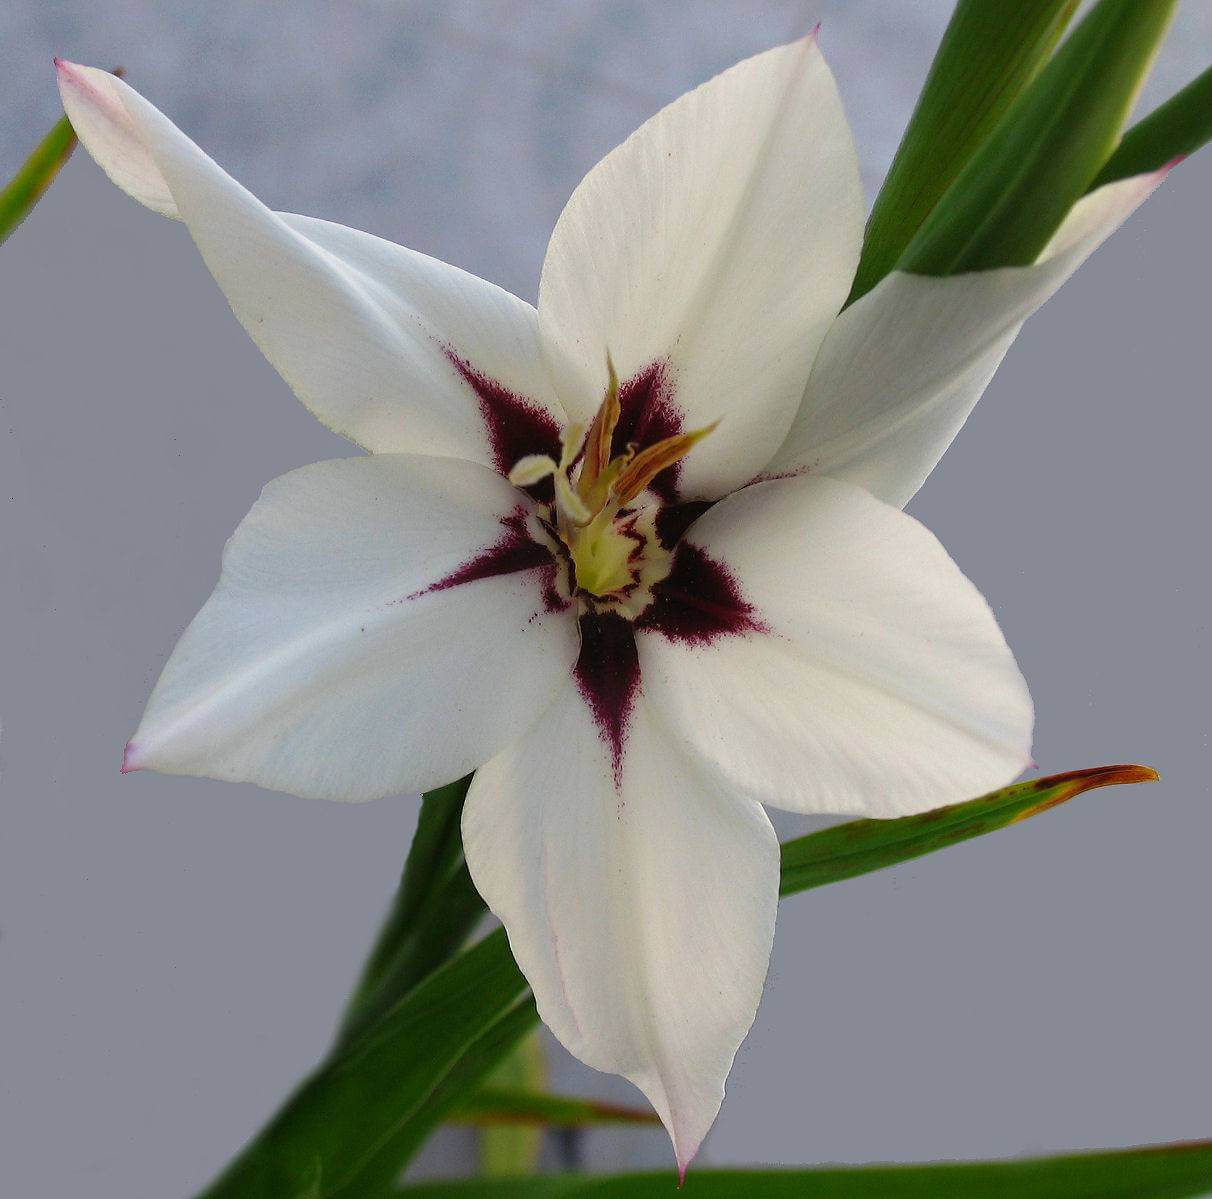 Be ‘Gladiolus’: It’s August’s Birth Flower!